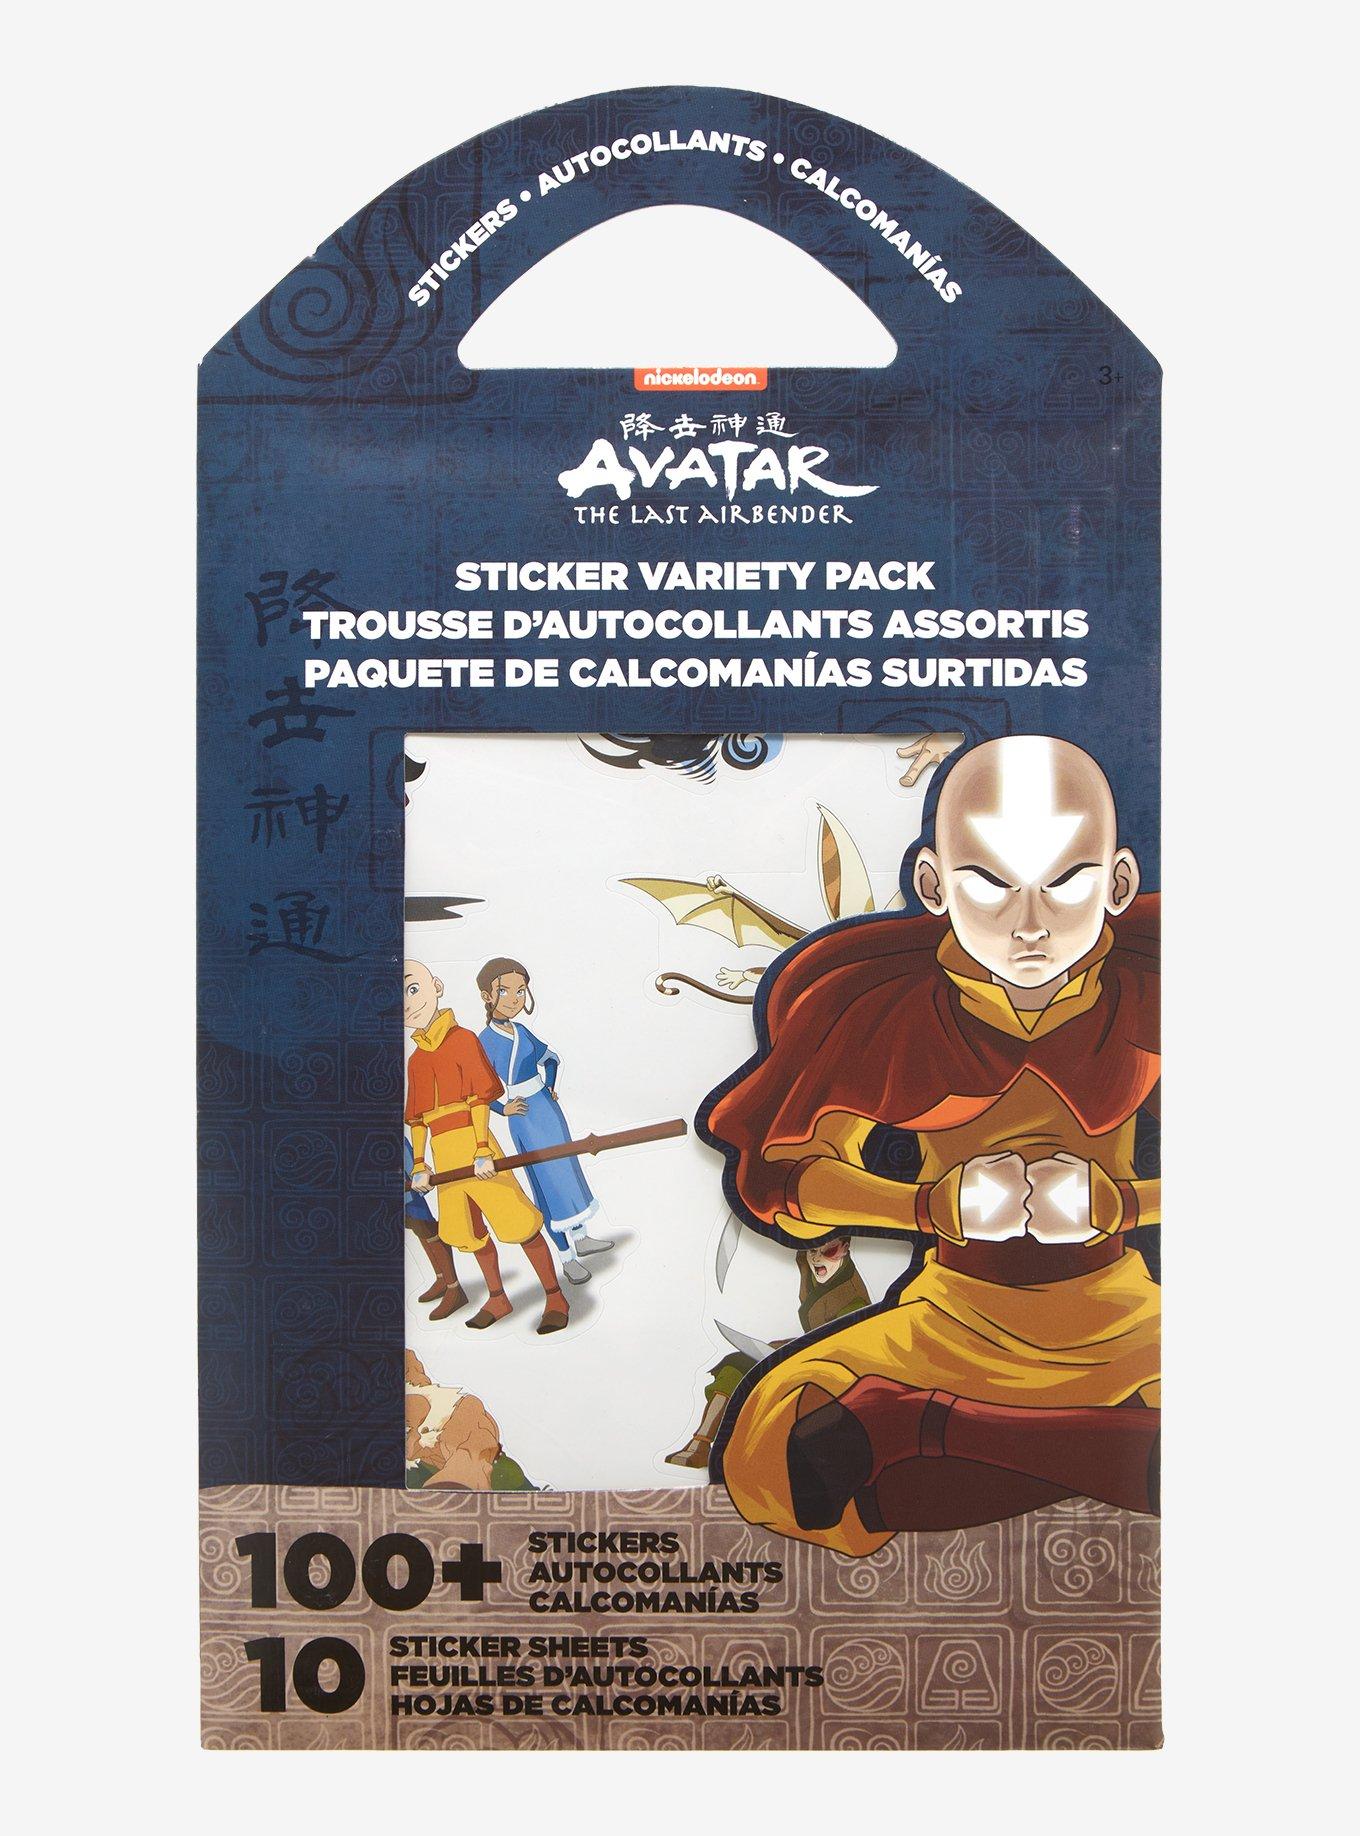 Avatar the last airbender Sticker Sheets